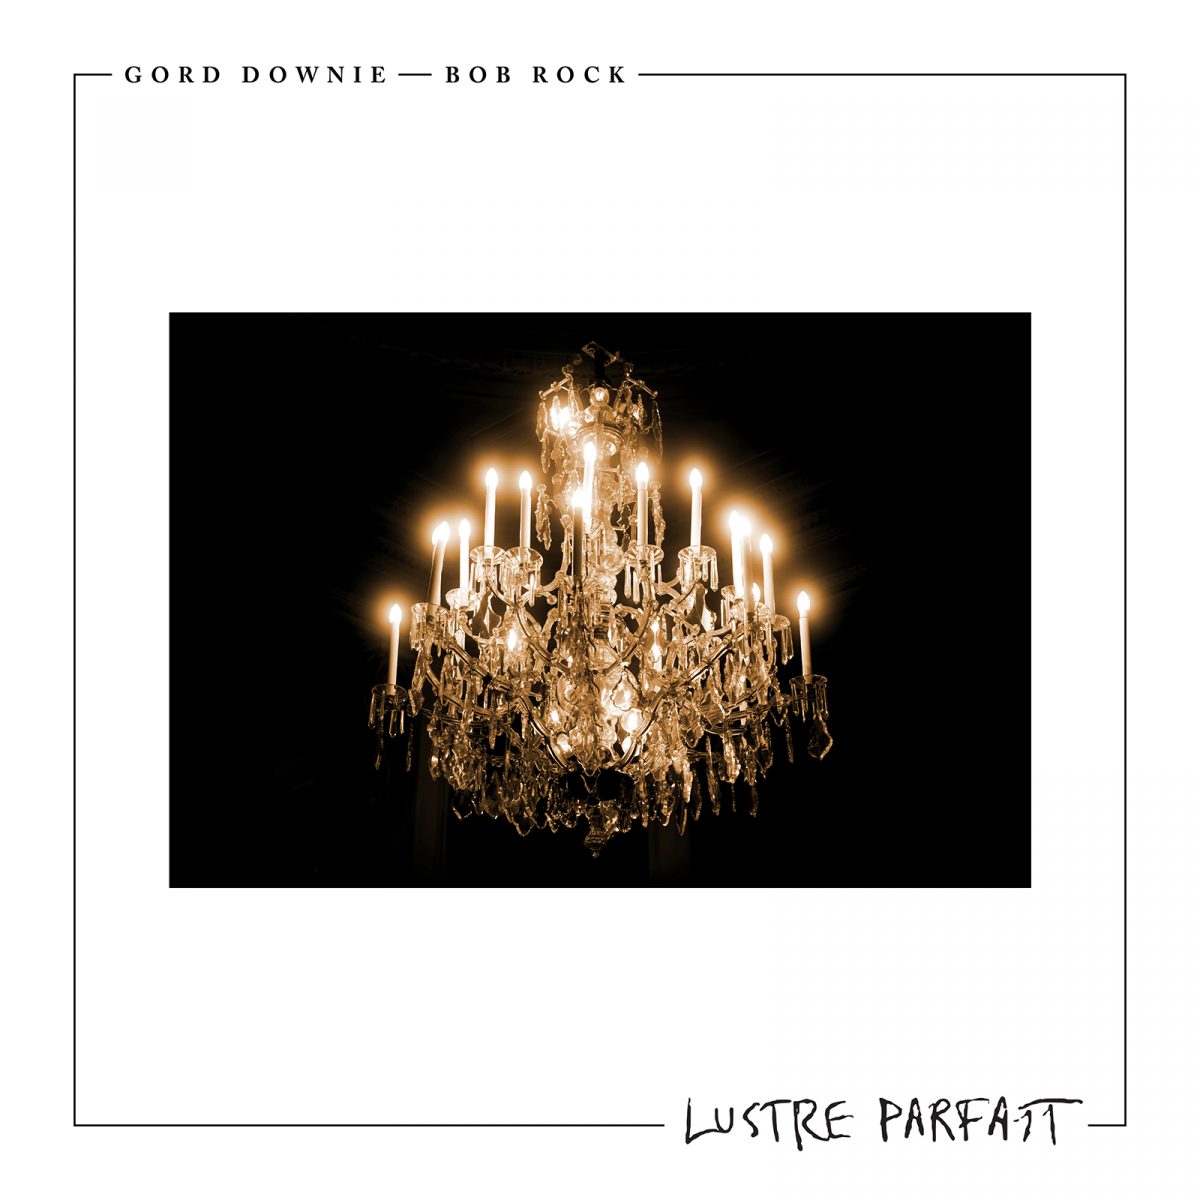 Gord Downie and Bob Rock - Lustre Parfait